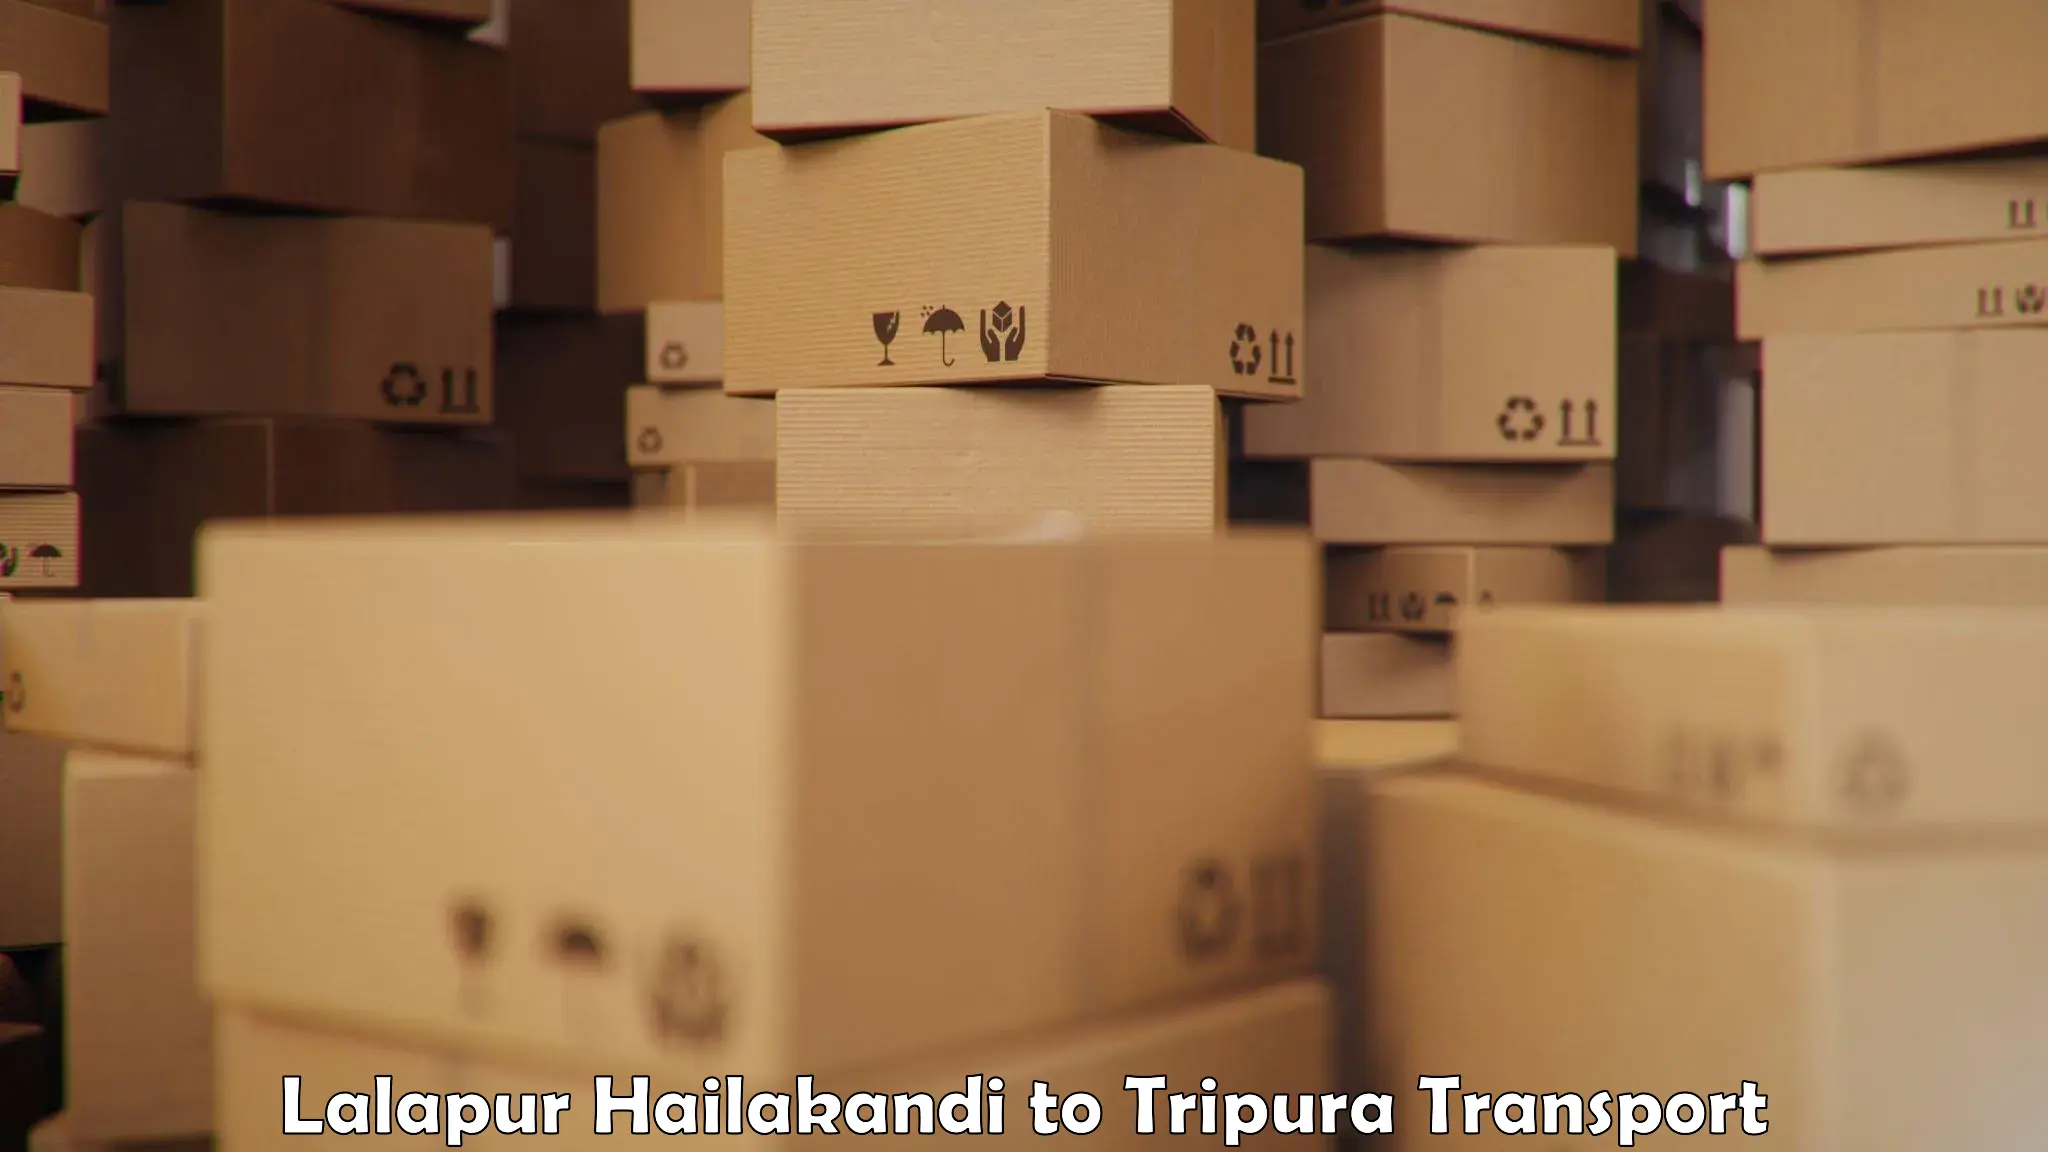 Delivery service Lalapur Hailakandi to Udaipur Tripura